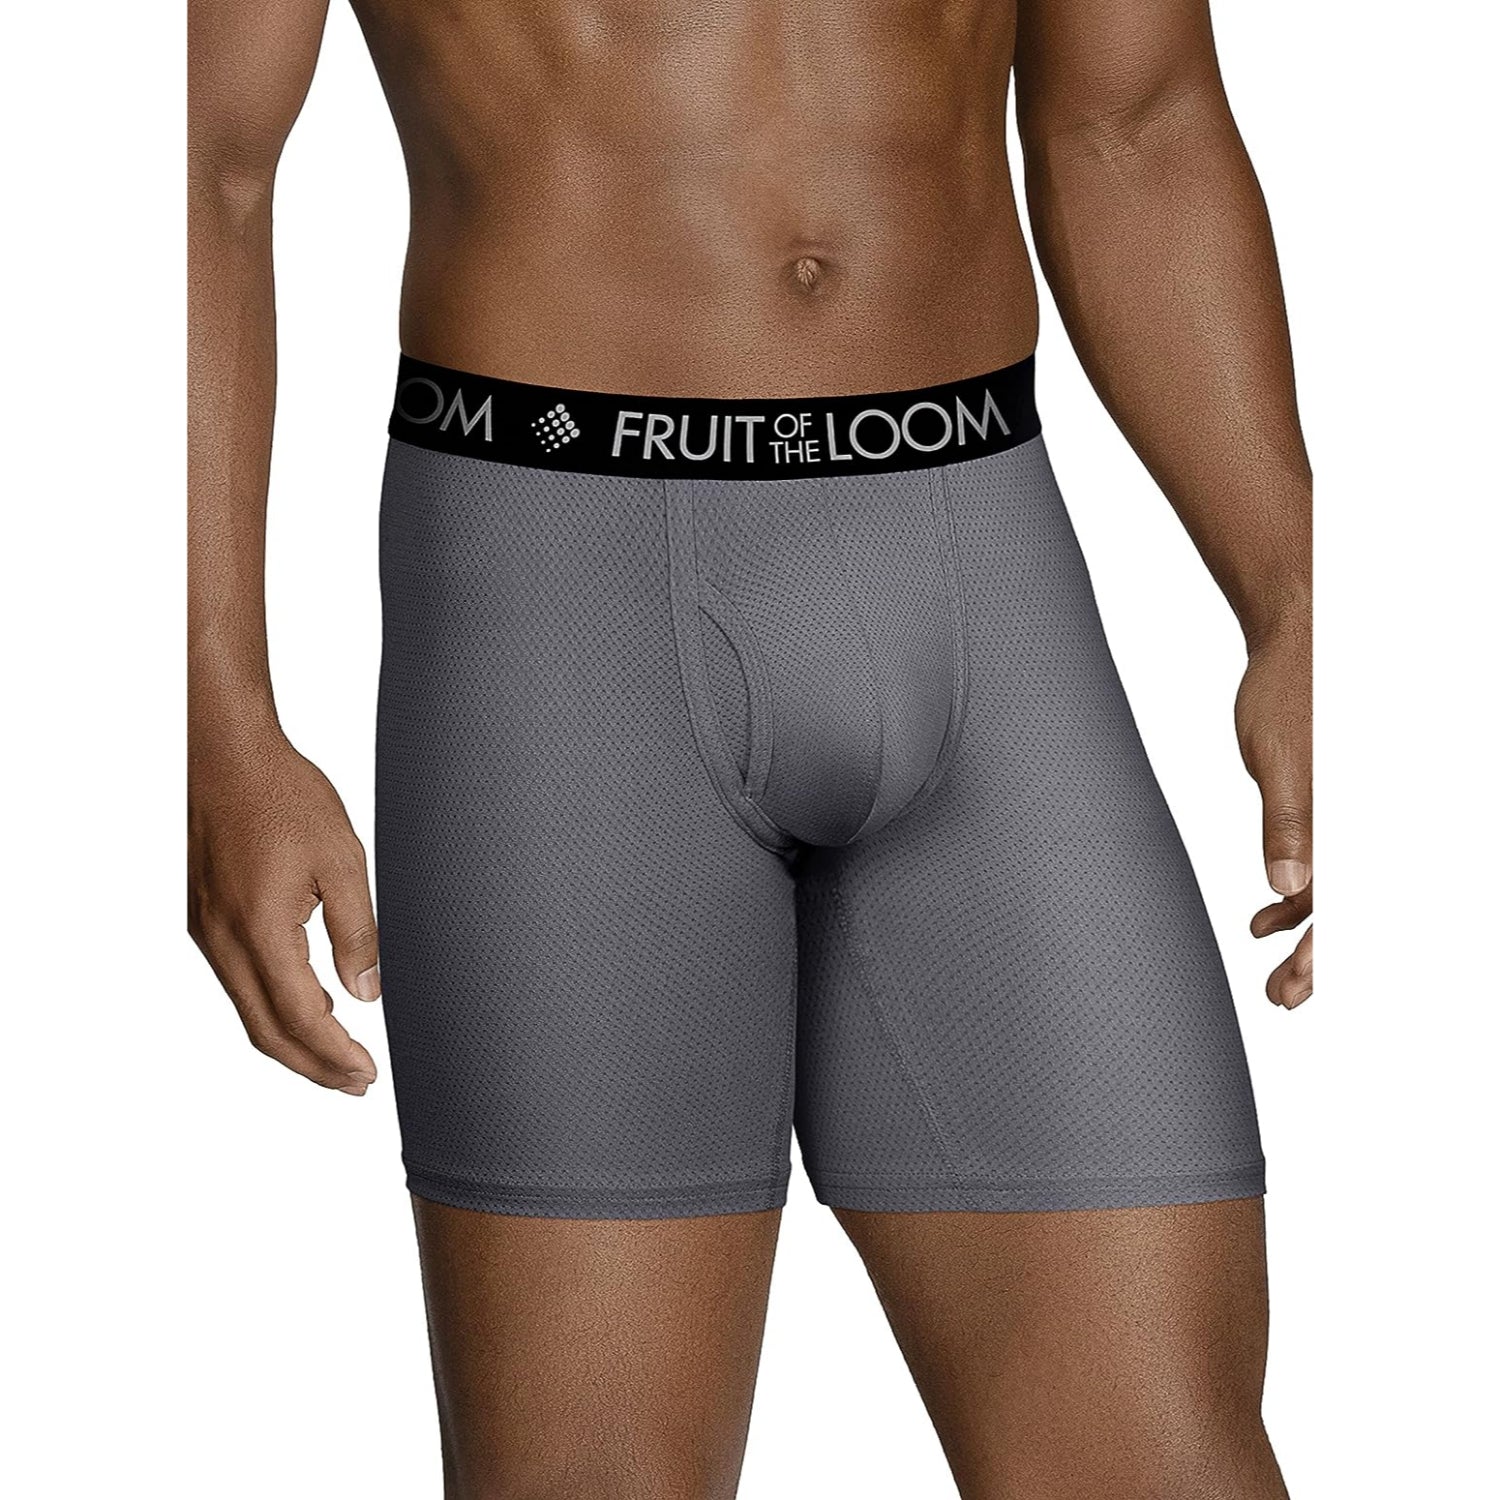 BODY GLOVE (5363) 3pcs Men Underwear Mini Briefs